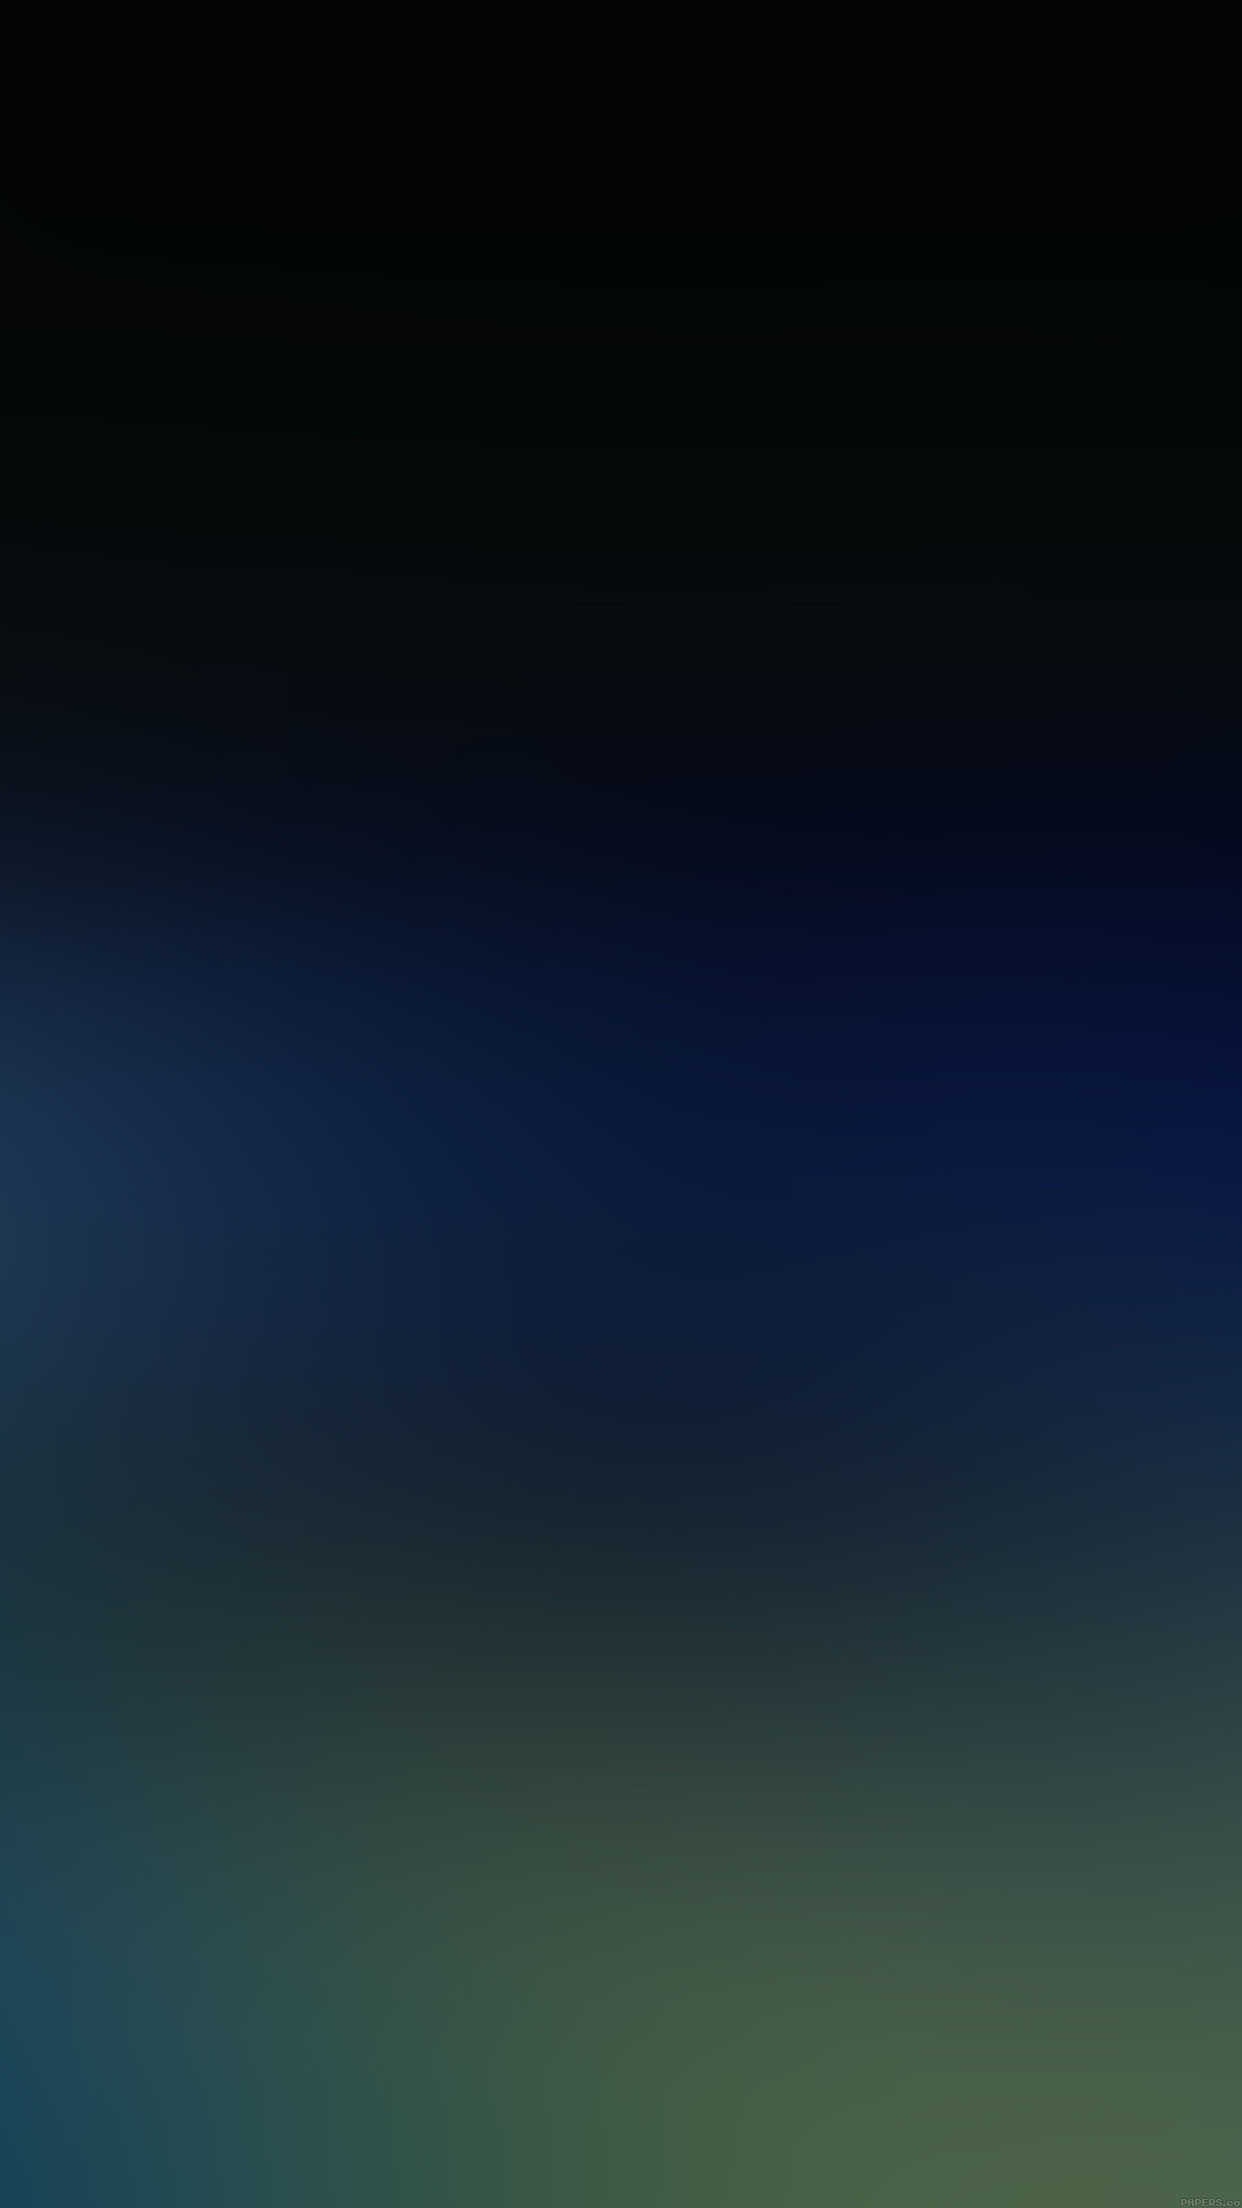 Iphone Black Blur Background - 1242x2208 Wallpaper 